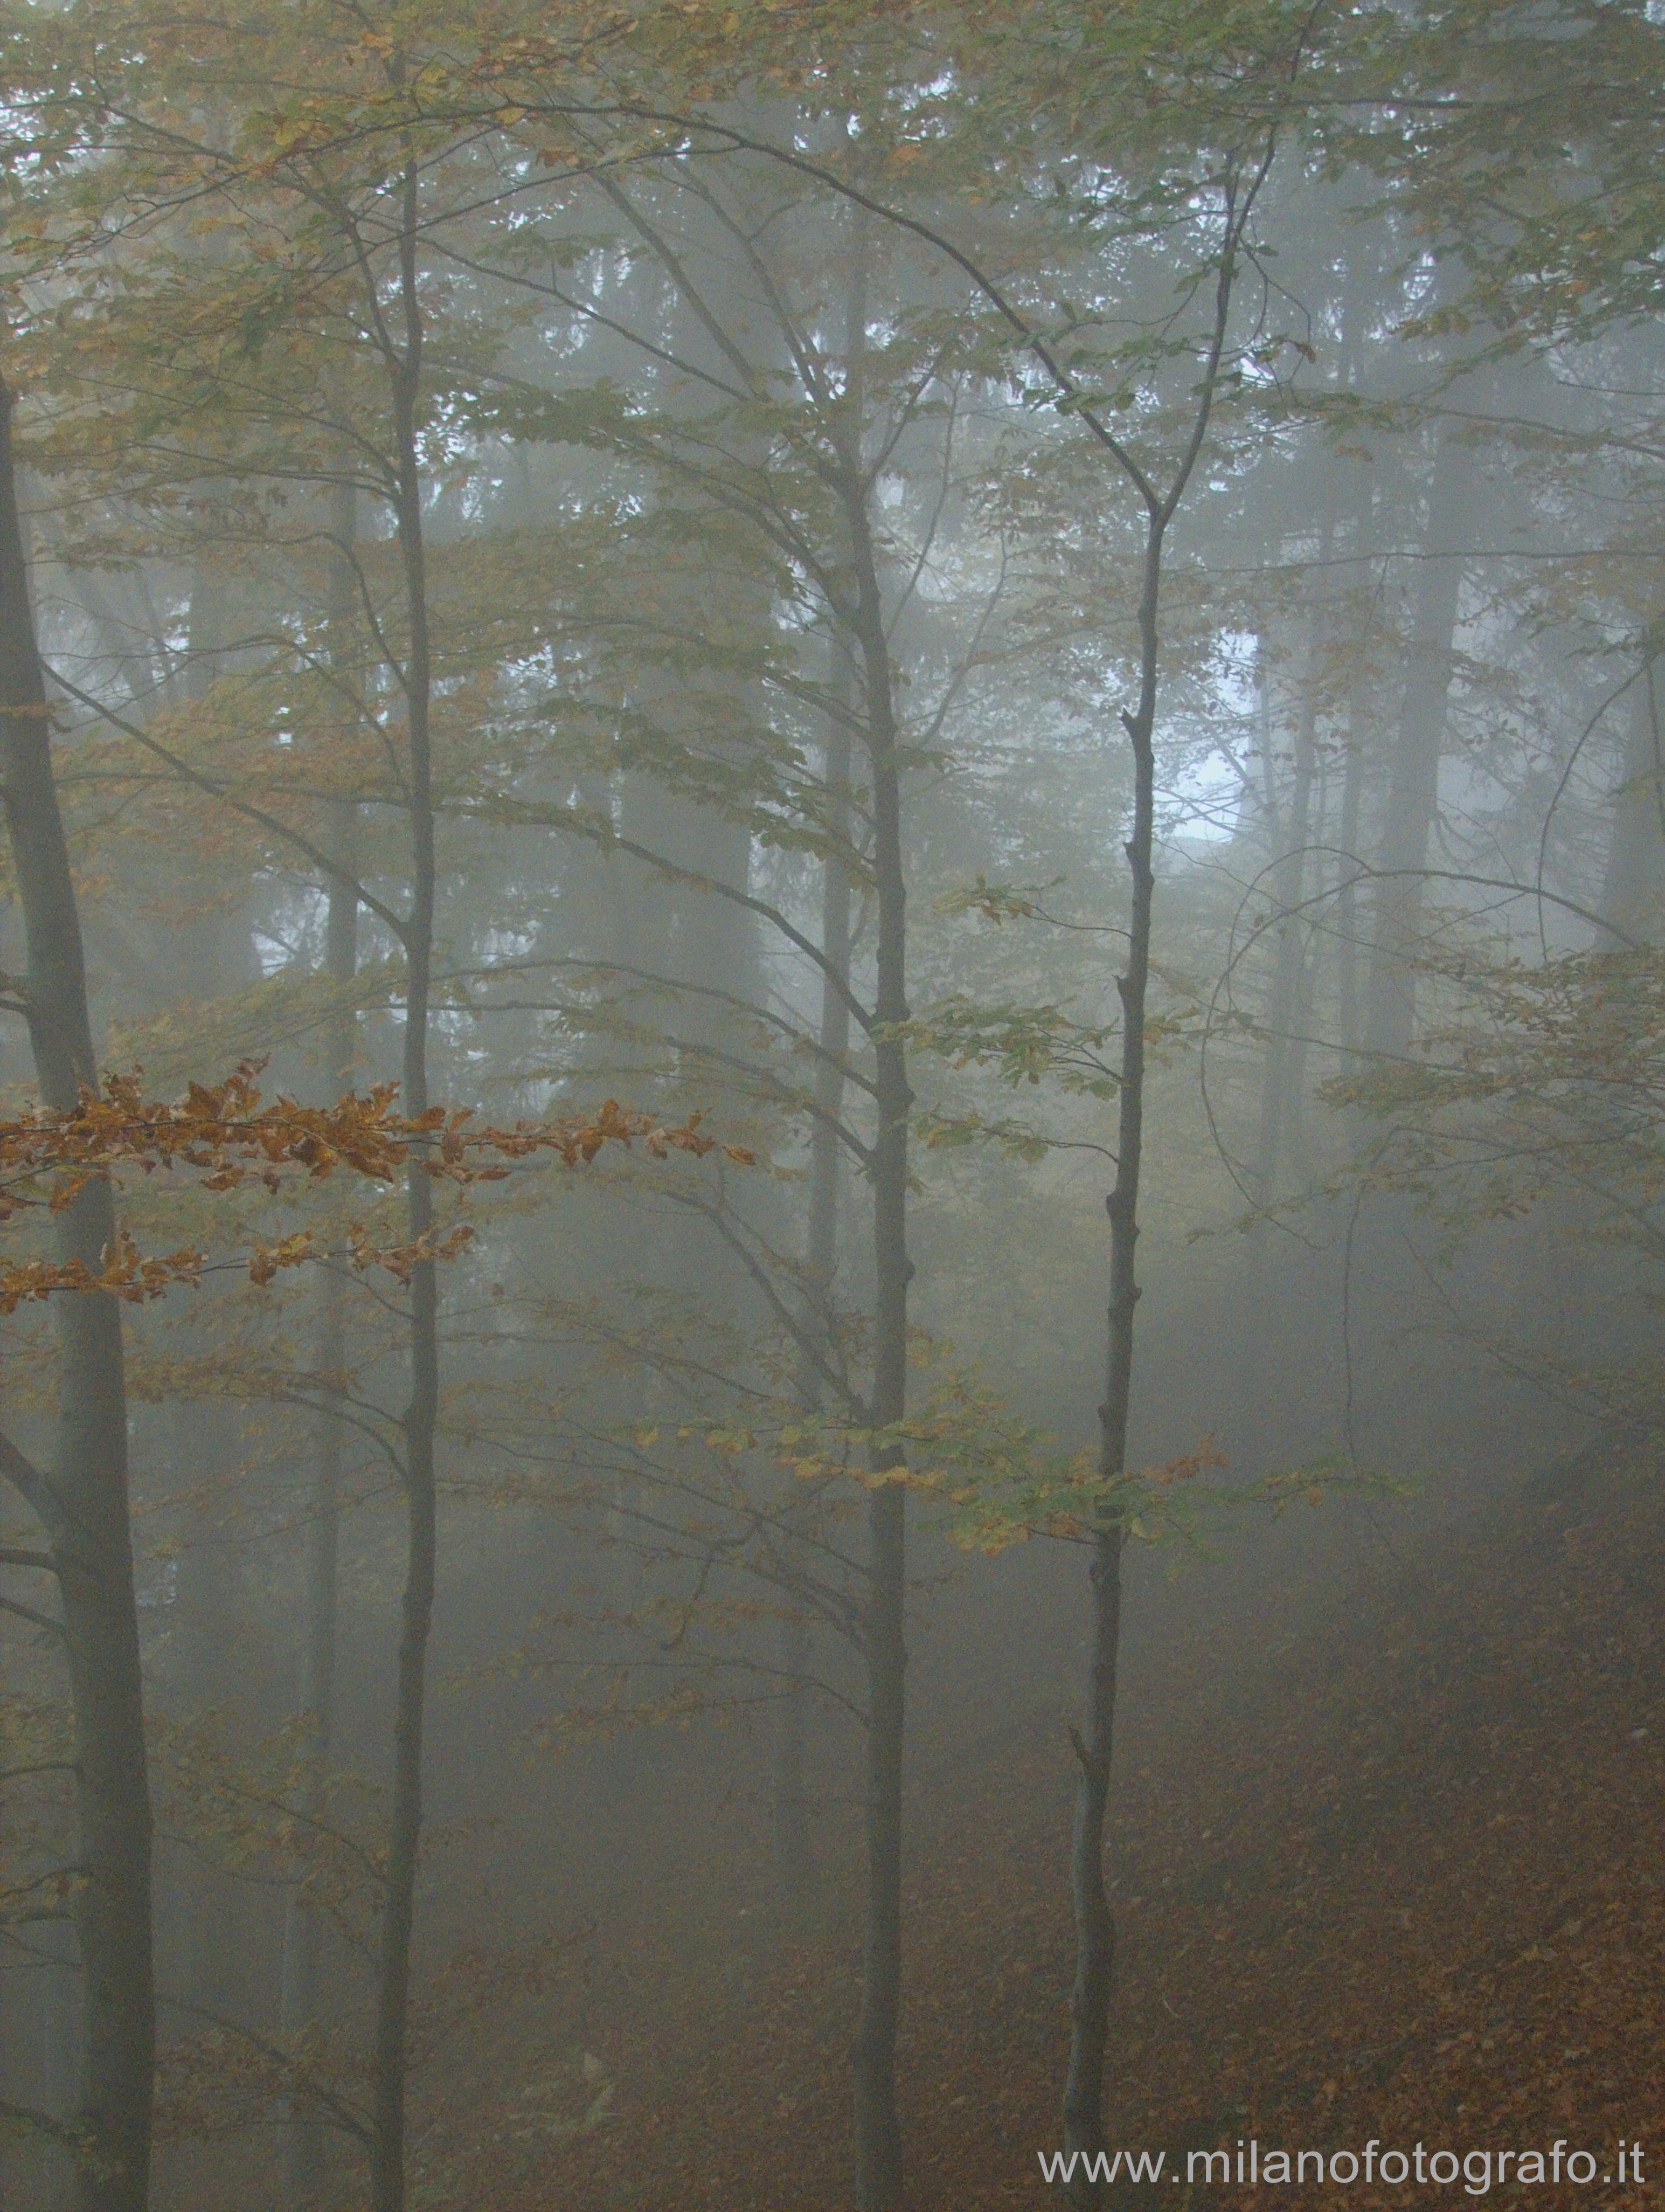 Biella (Italy): Wood in the morning fog under the Sanctuary of Oropa - Biella (Italy)